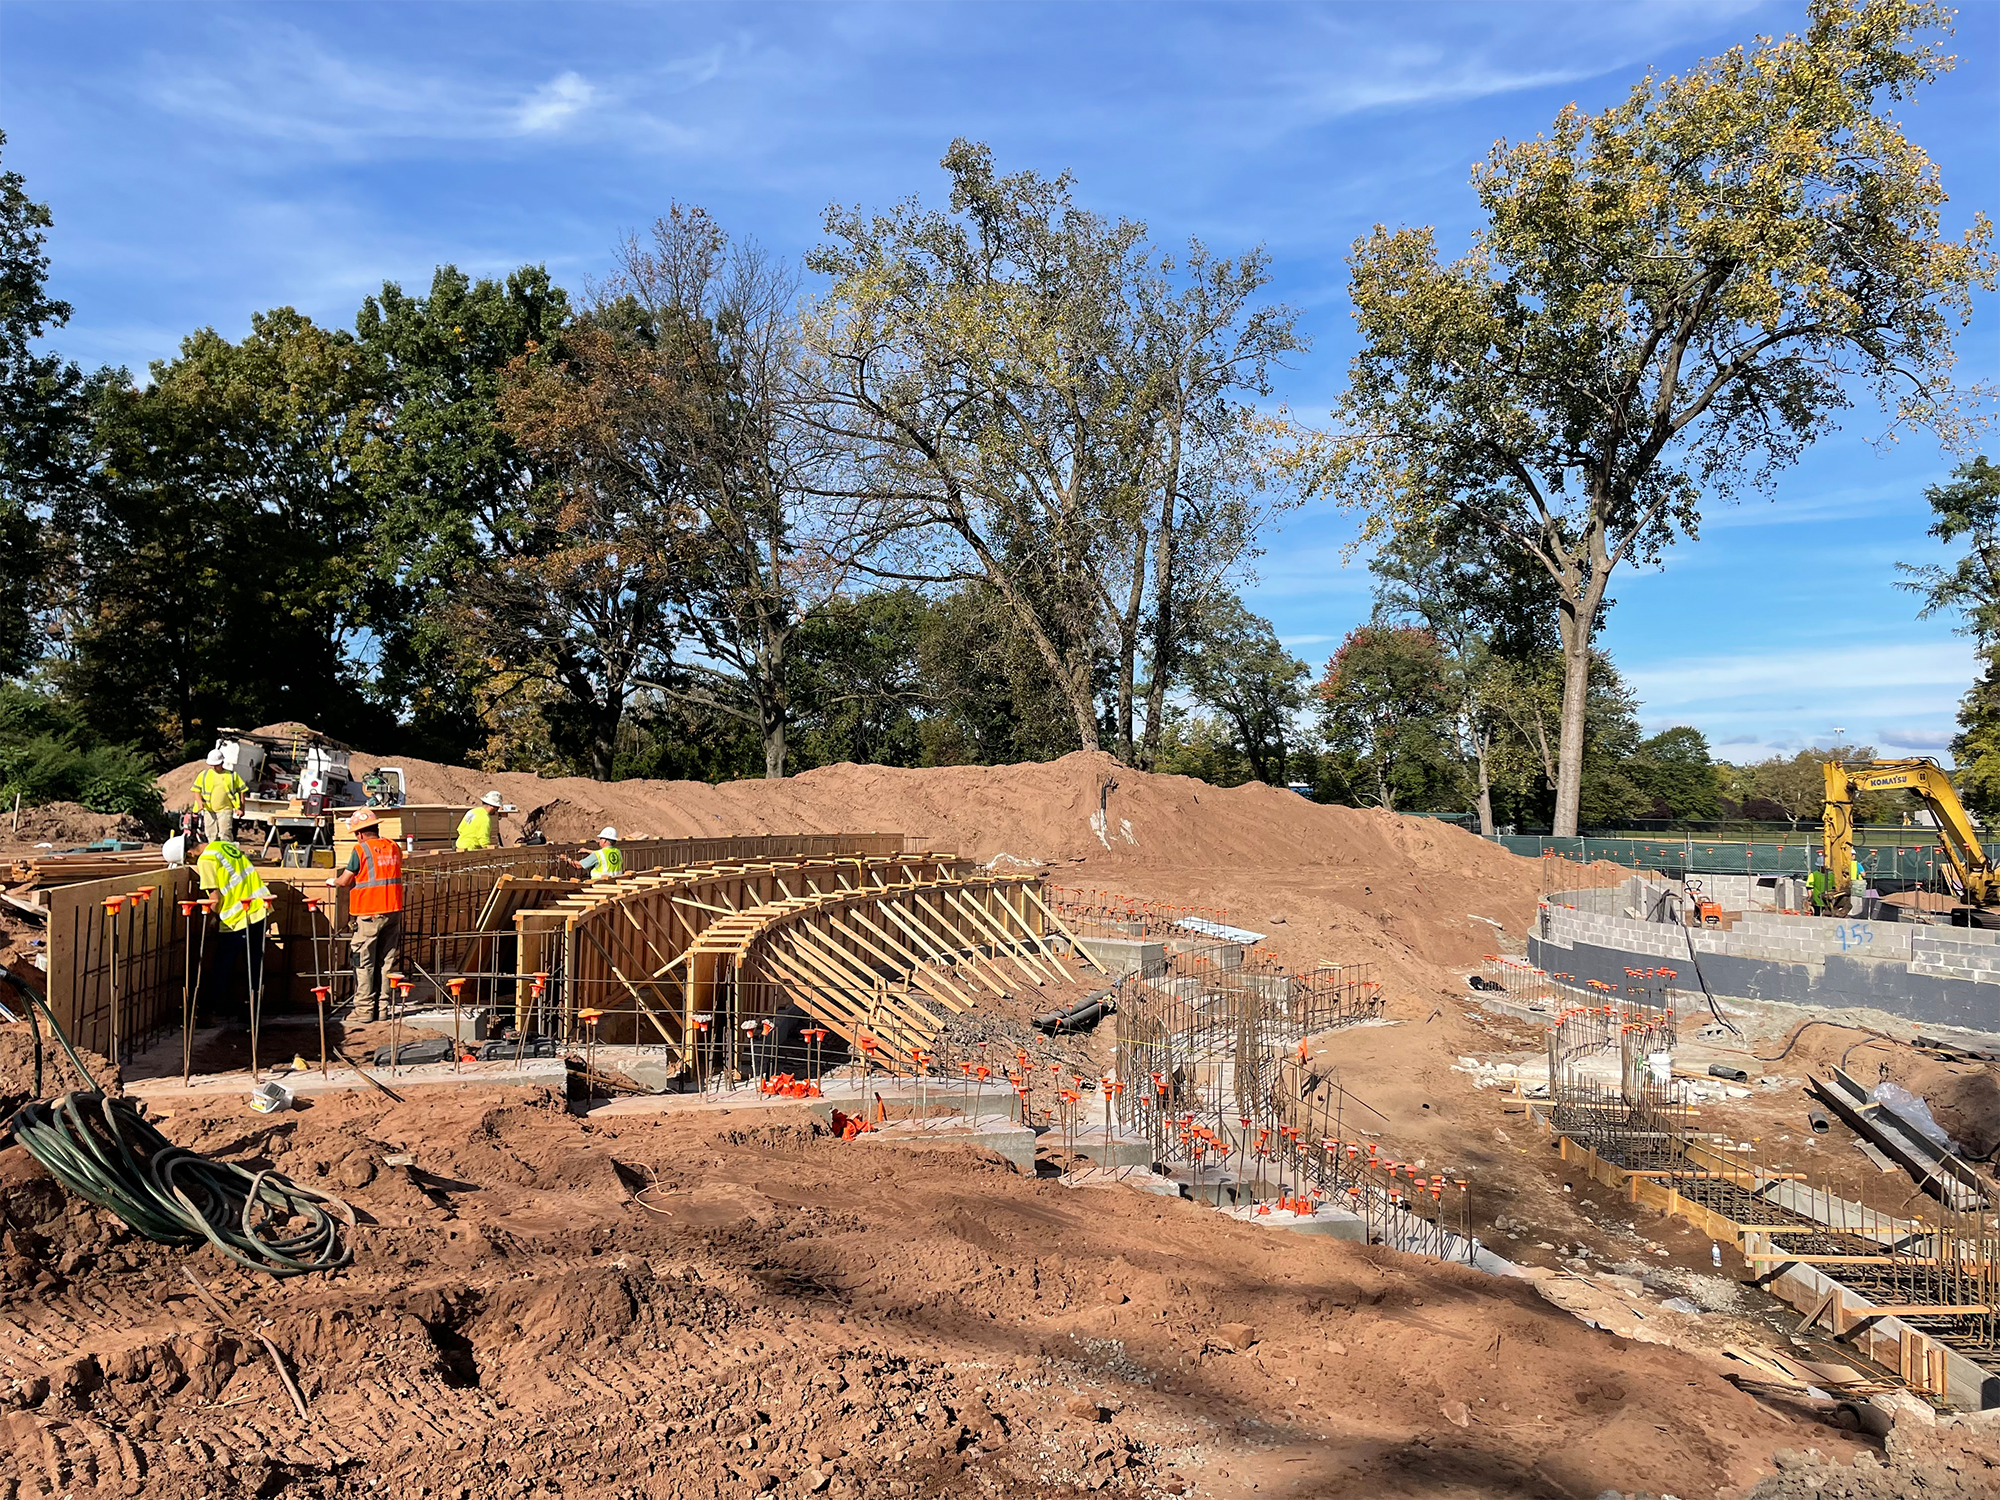 10/22/21: Amphitheater seats under construction